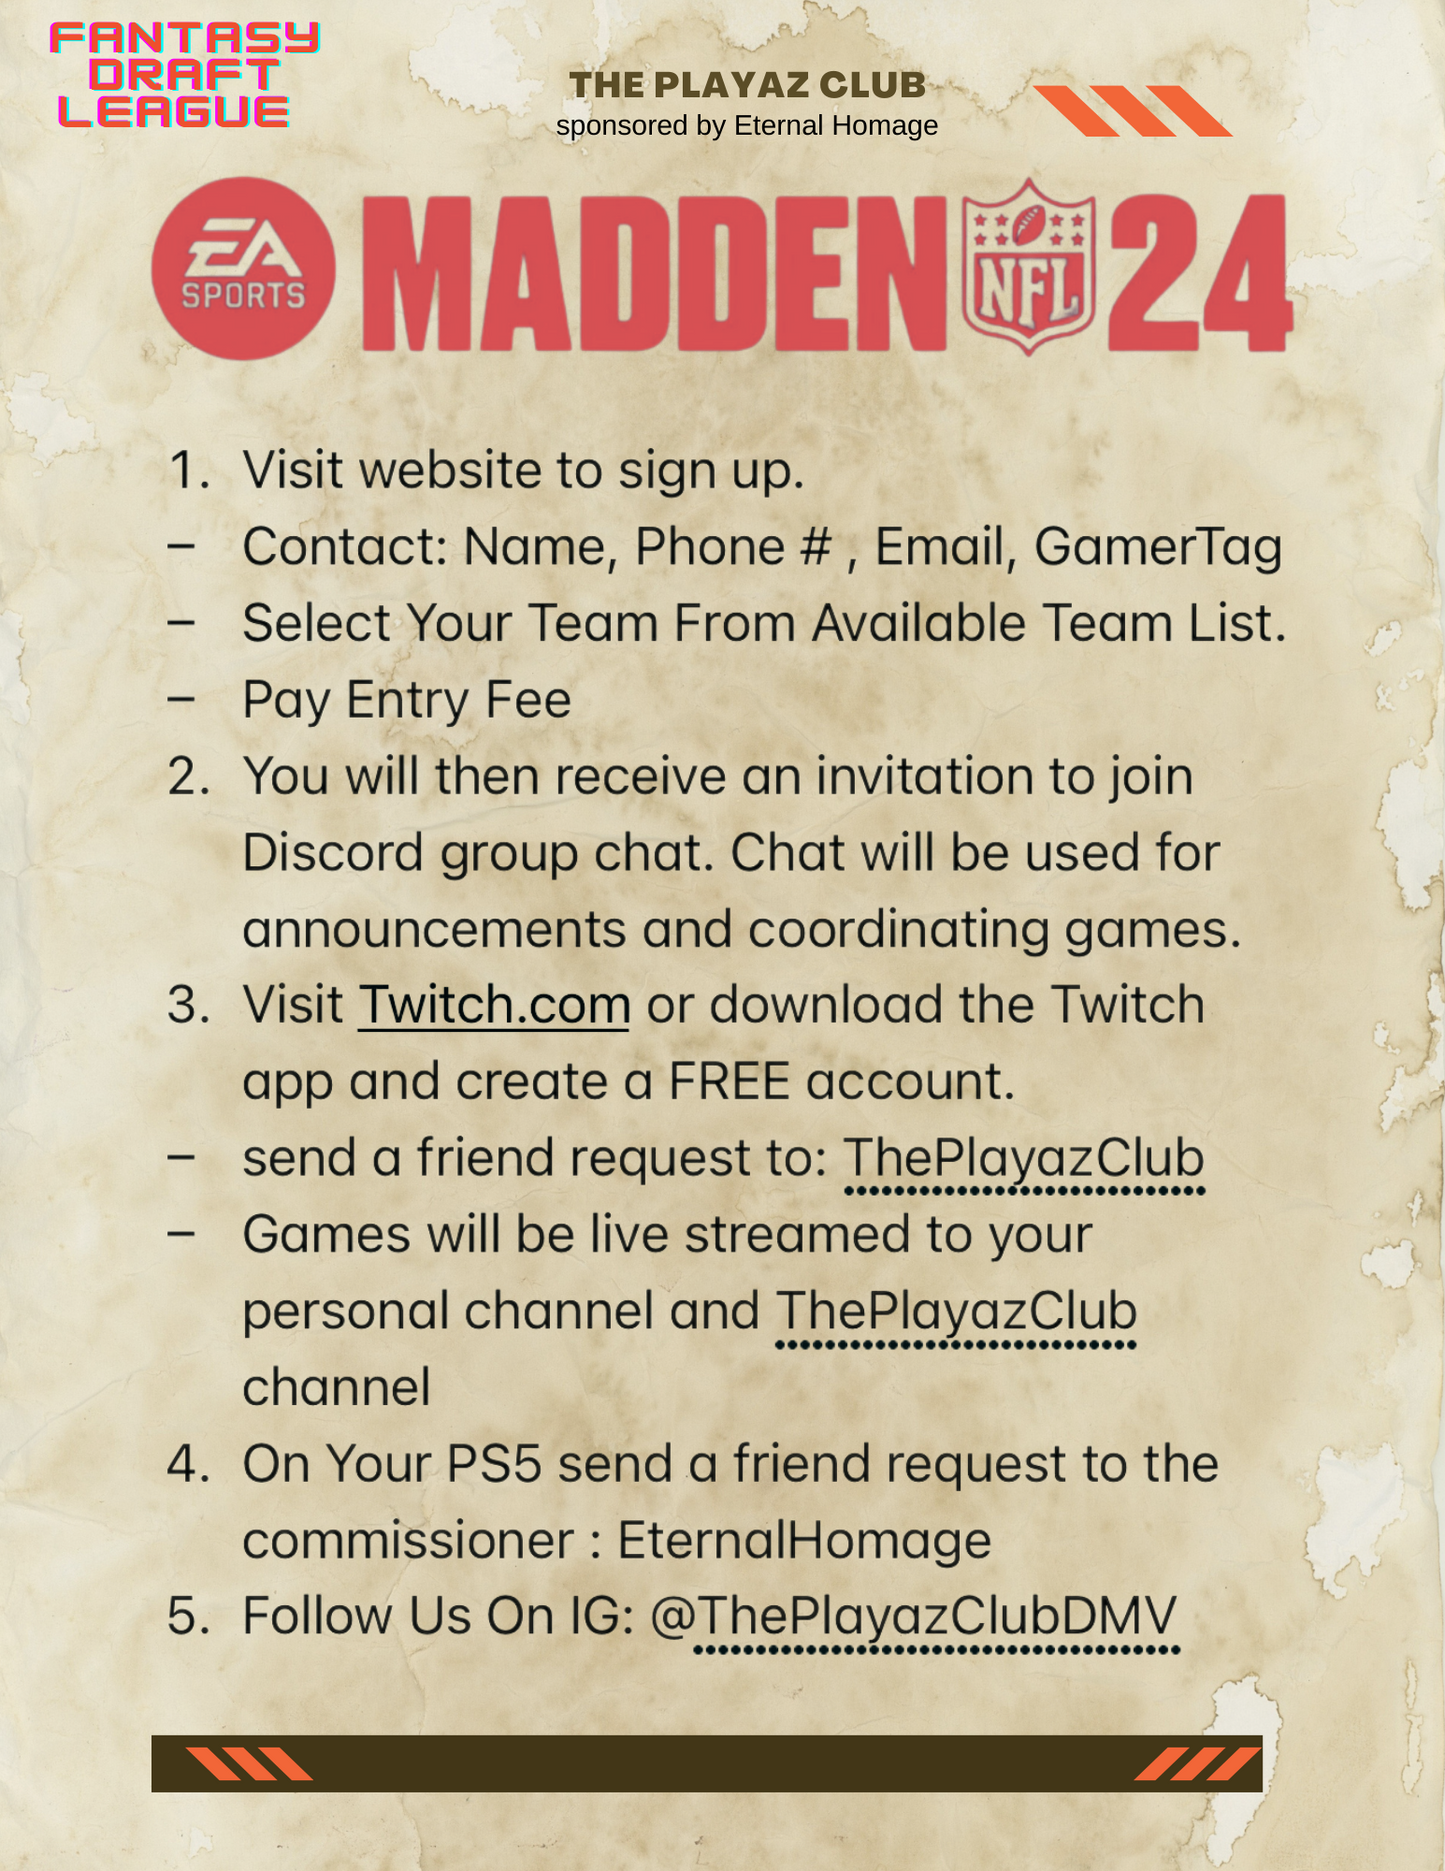 Madden 24 Fantasy League Season 1